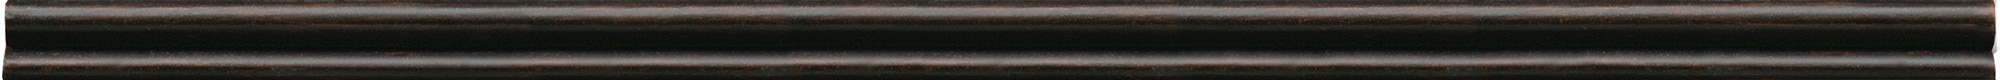 Oil Rub Bronze, Liner, 1/2X12, Satin